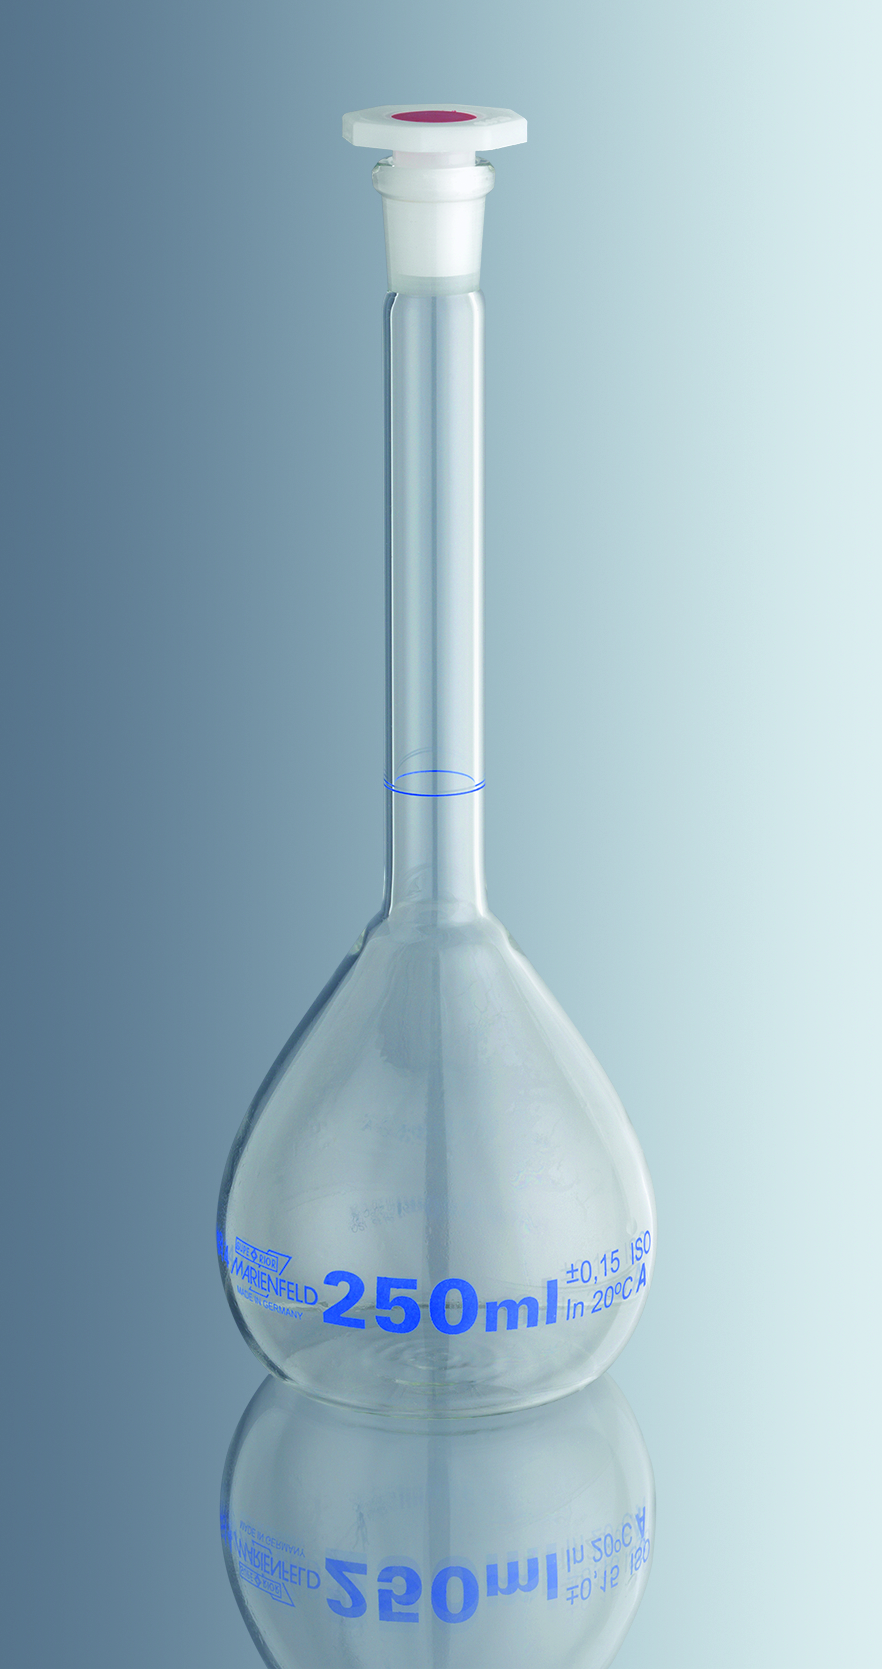 Marienfeld (Germany) Volumetric Flask Clear 1000ml,Class A(Lot Certified) High quality Borosil.Glass